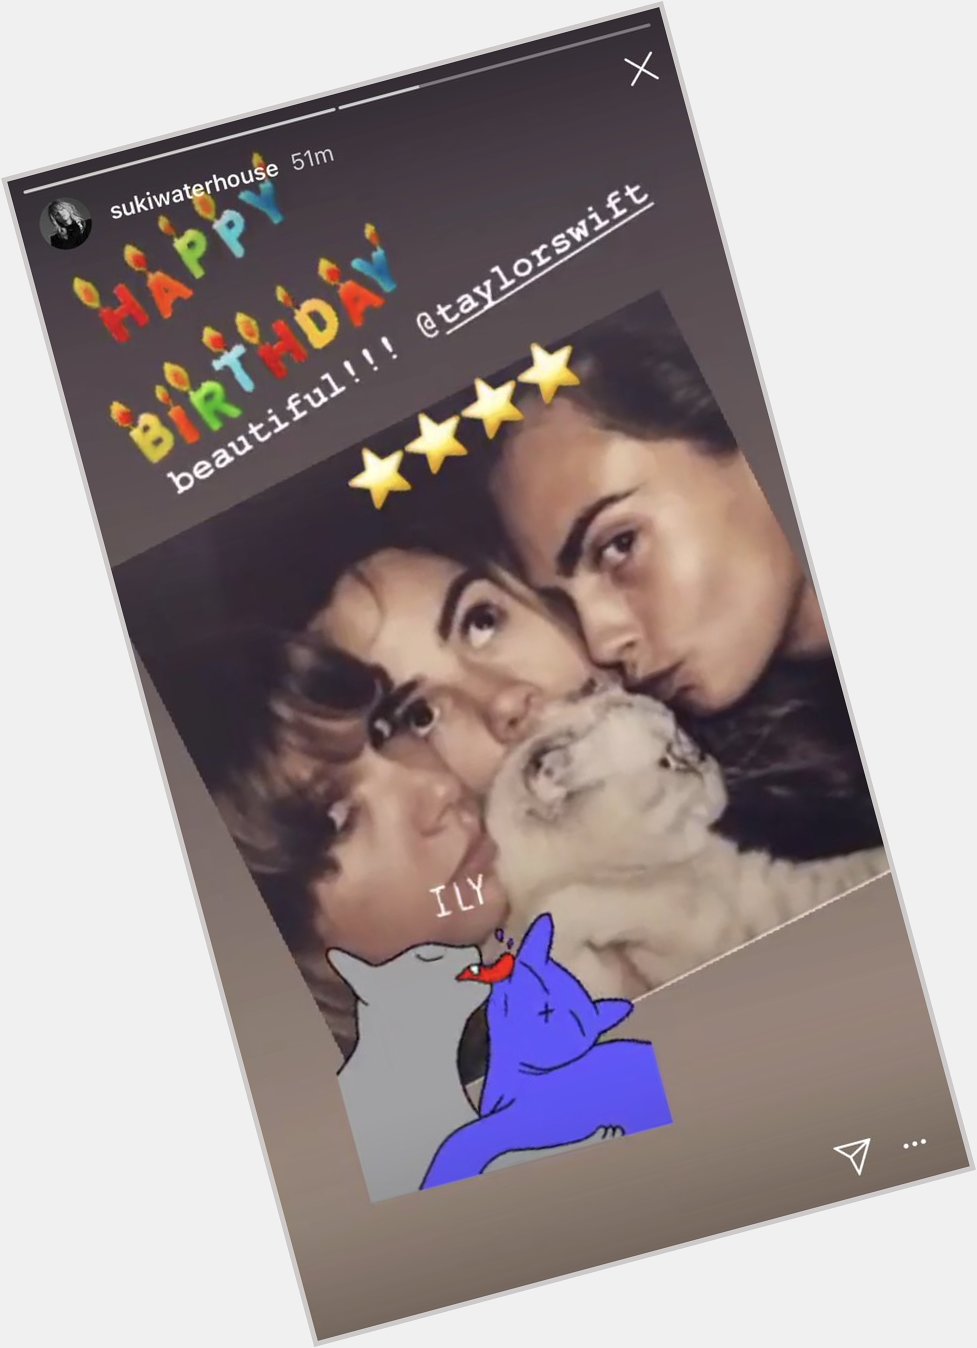 Suki Waterhouse wishing Taylor a happy birthday via instagram stories 